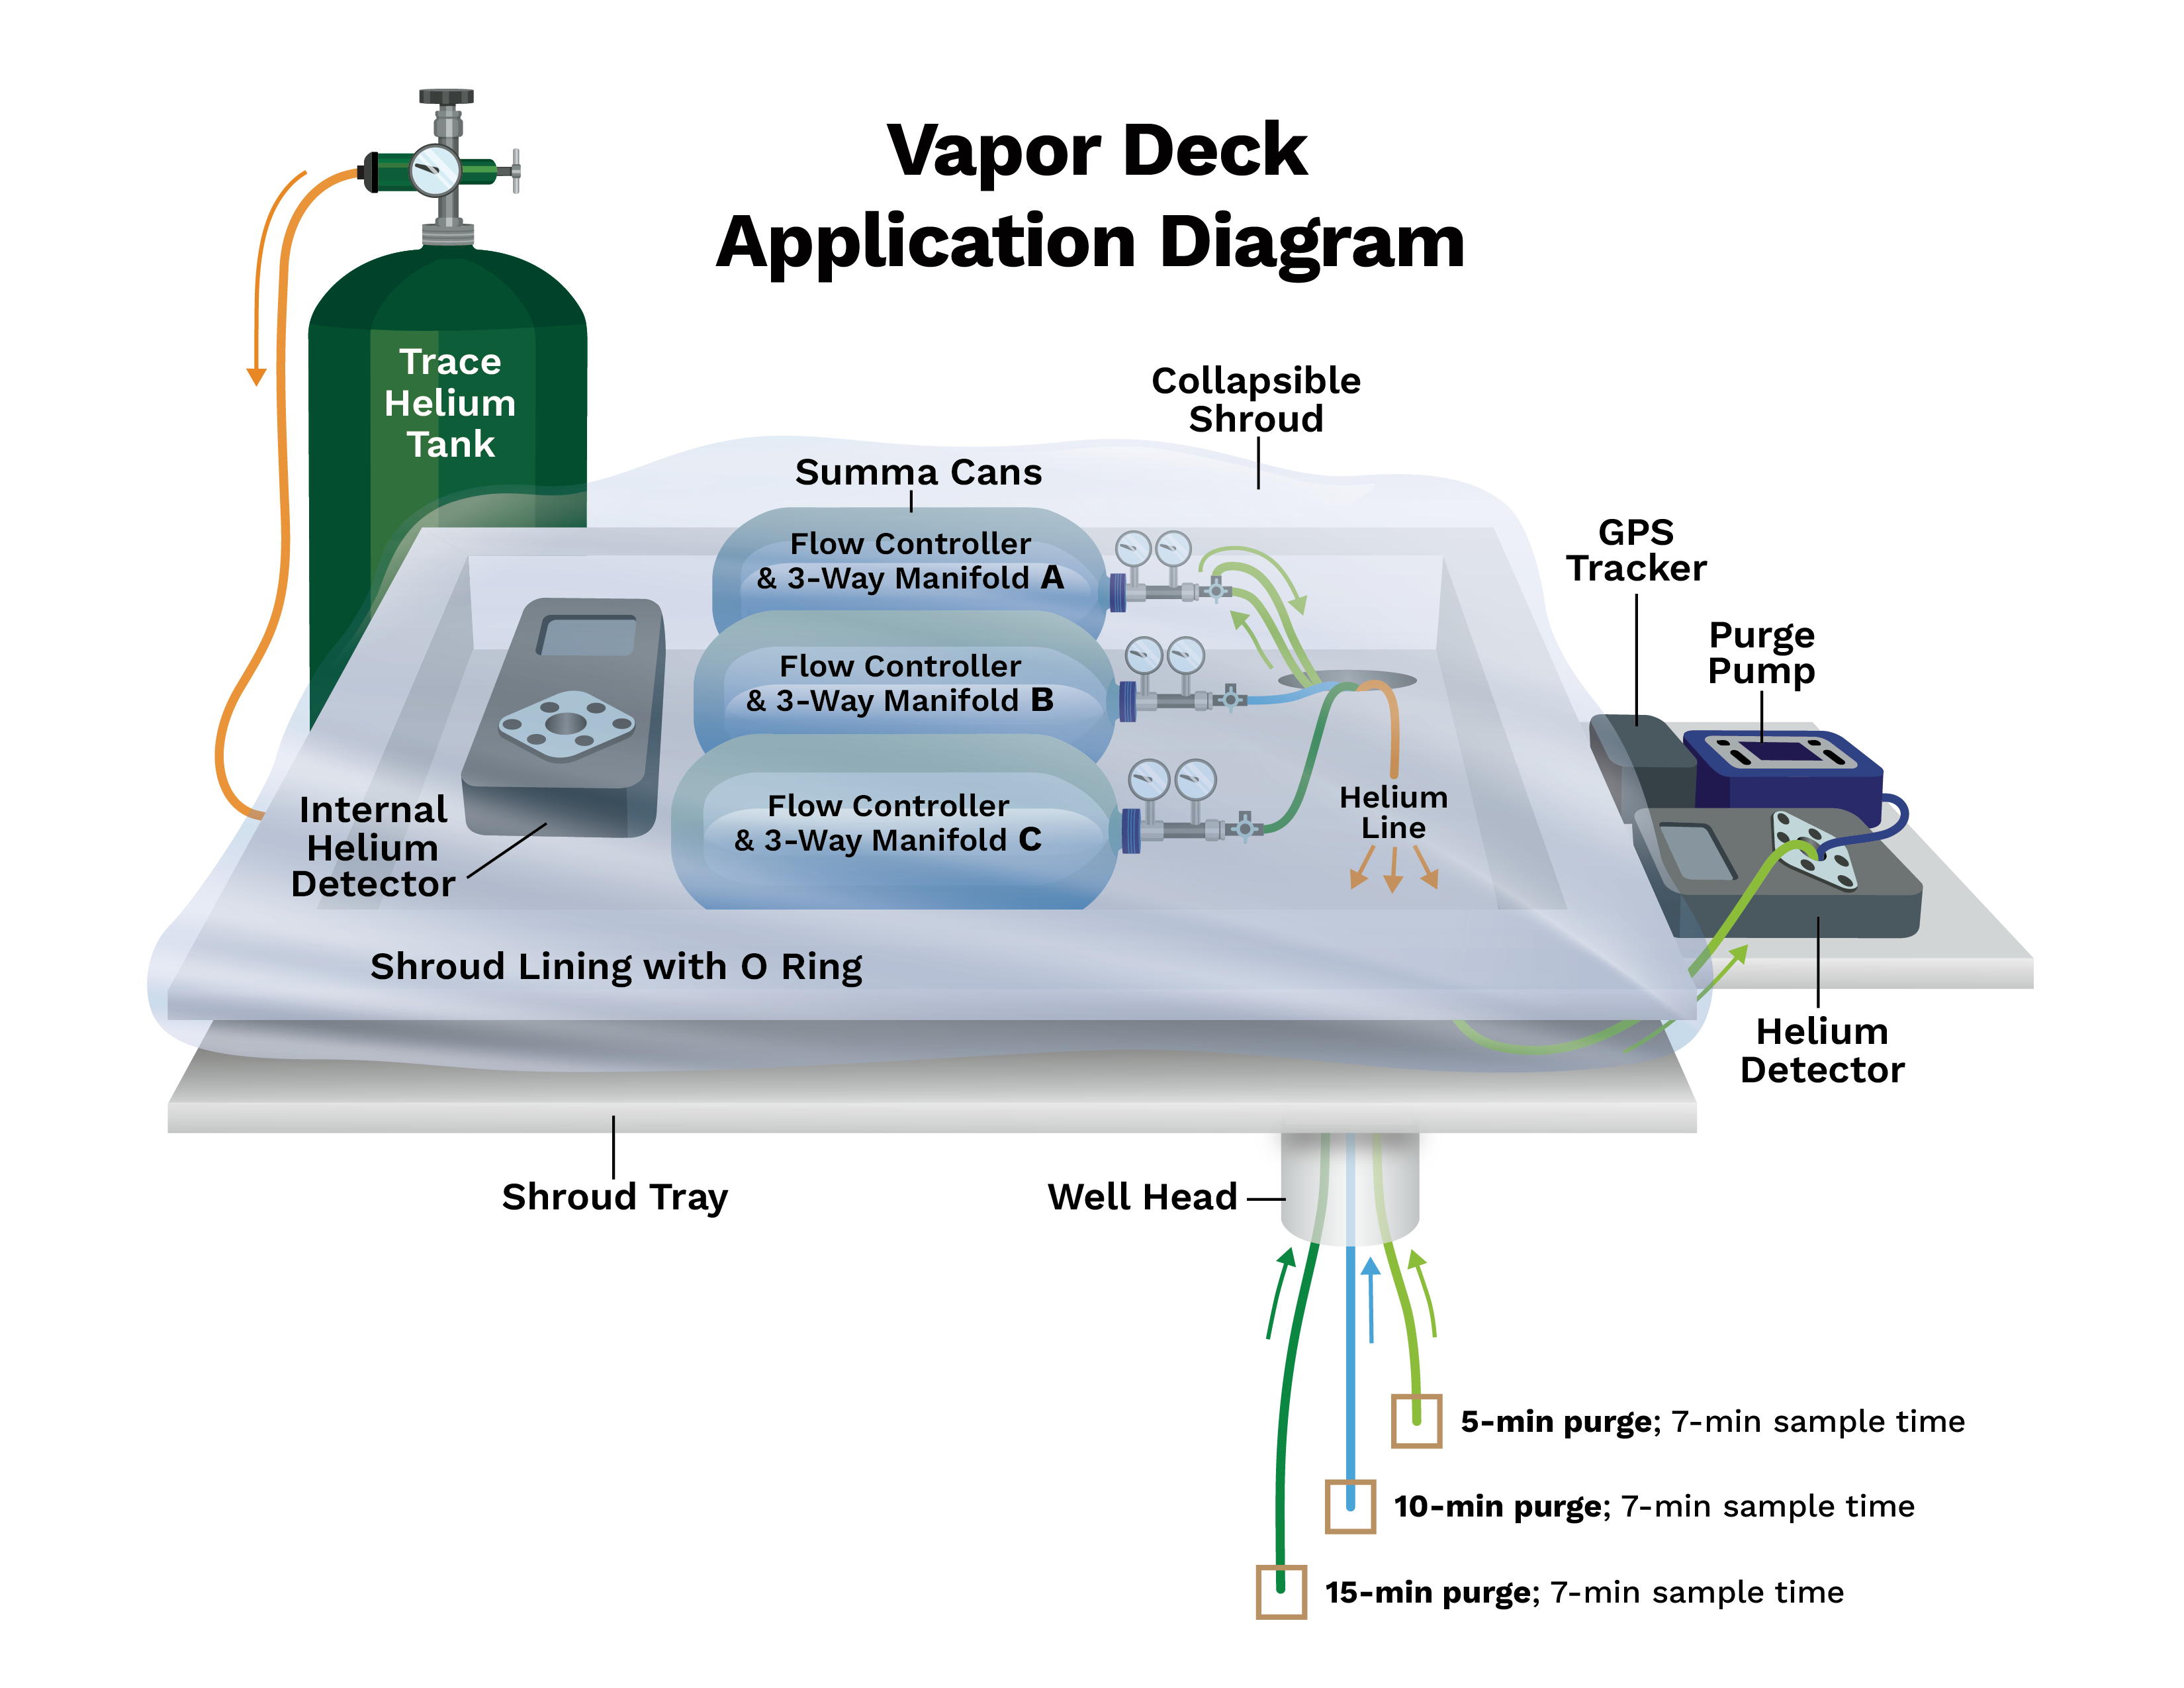 Vapor Deck Application Diagram